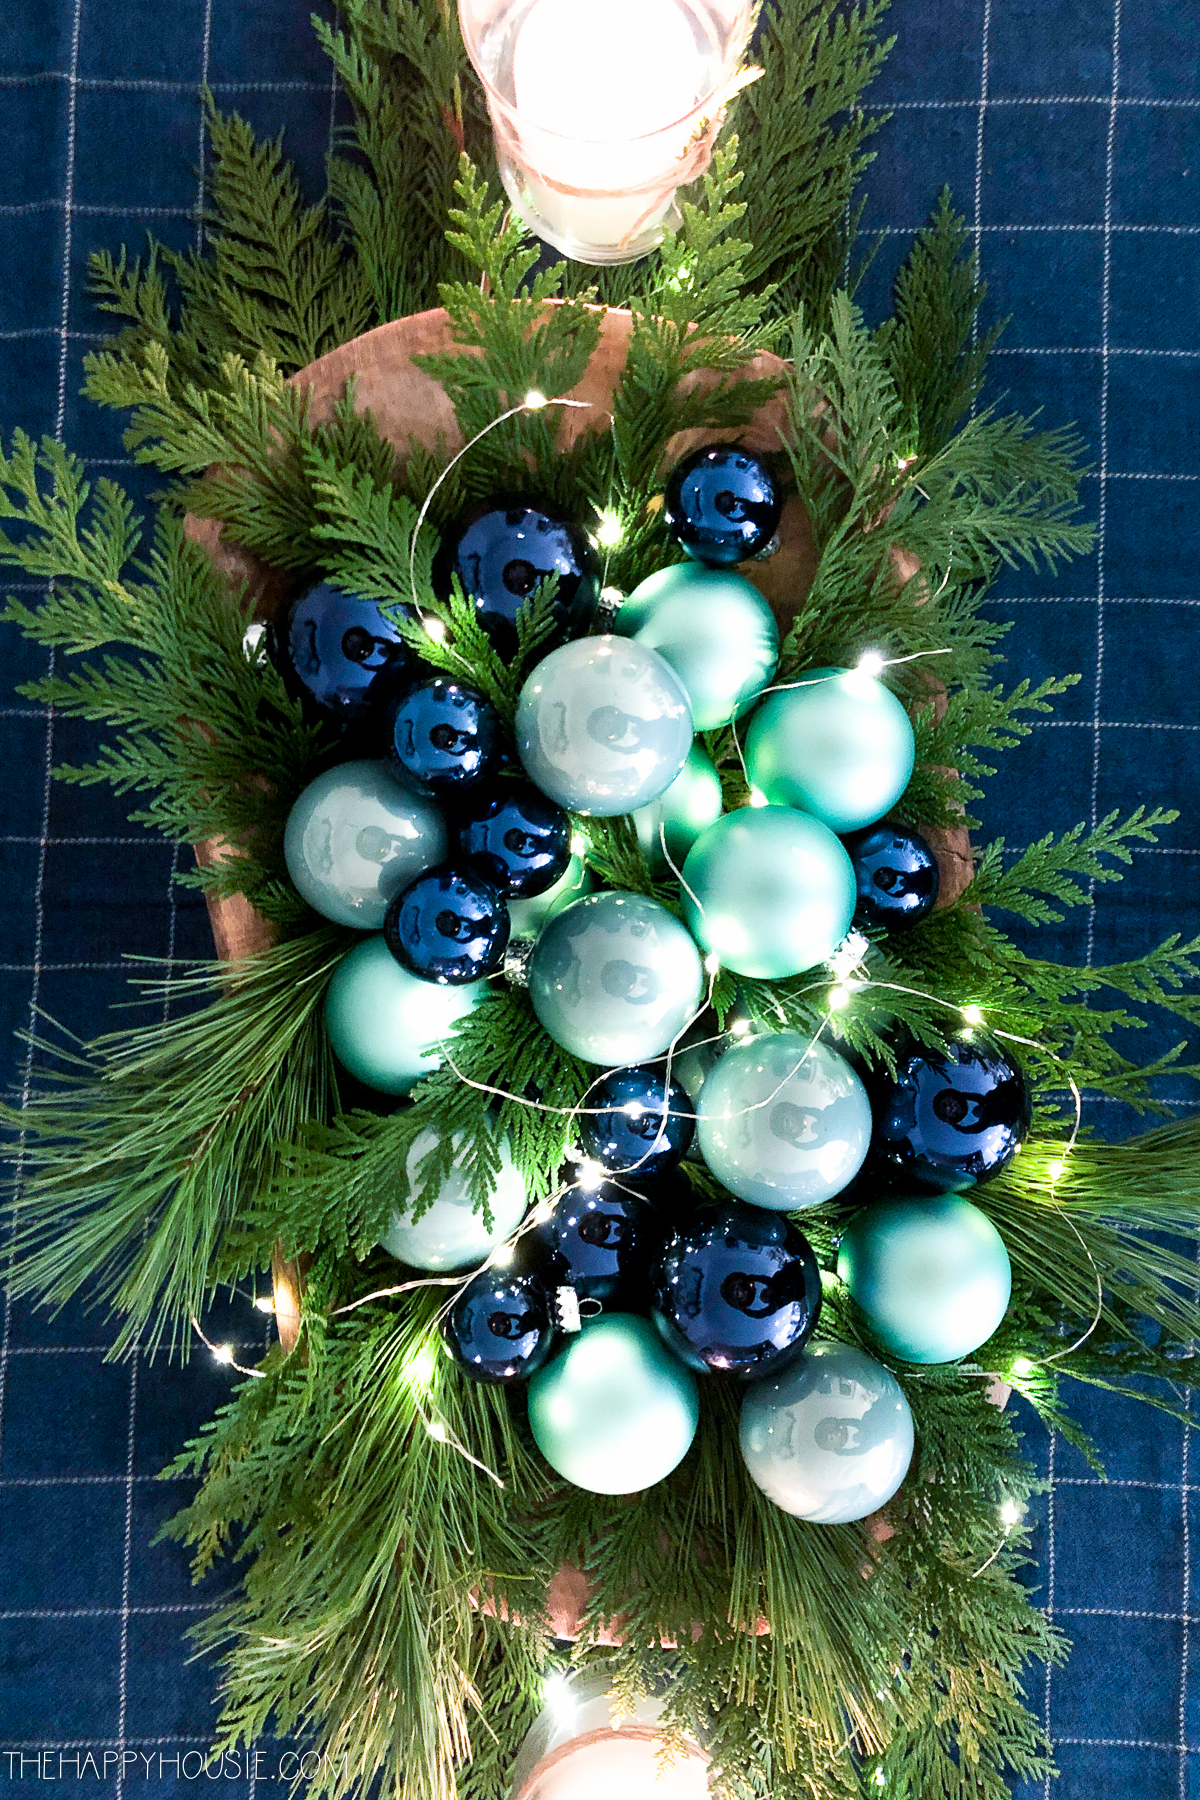 5 Minute DIY Ornament Centrepiece {that will last all season!}